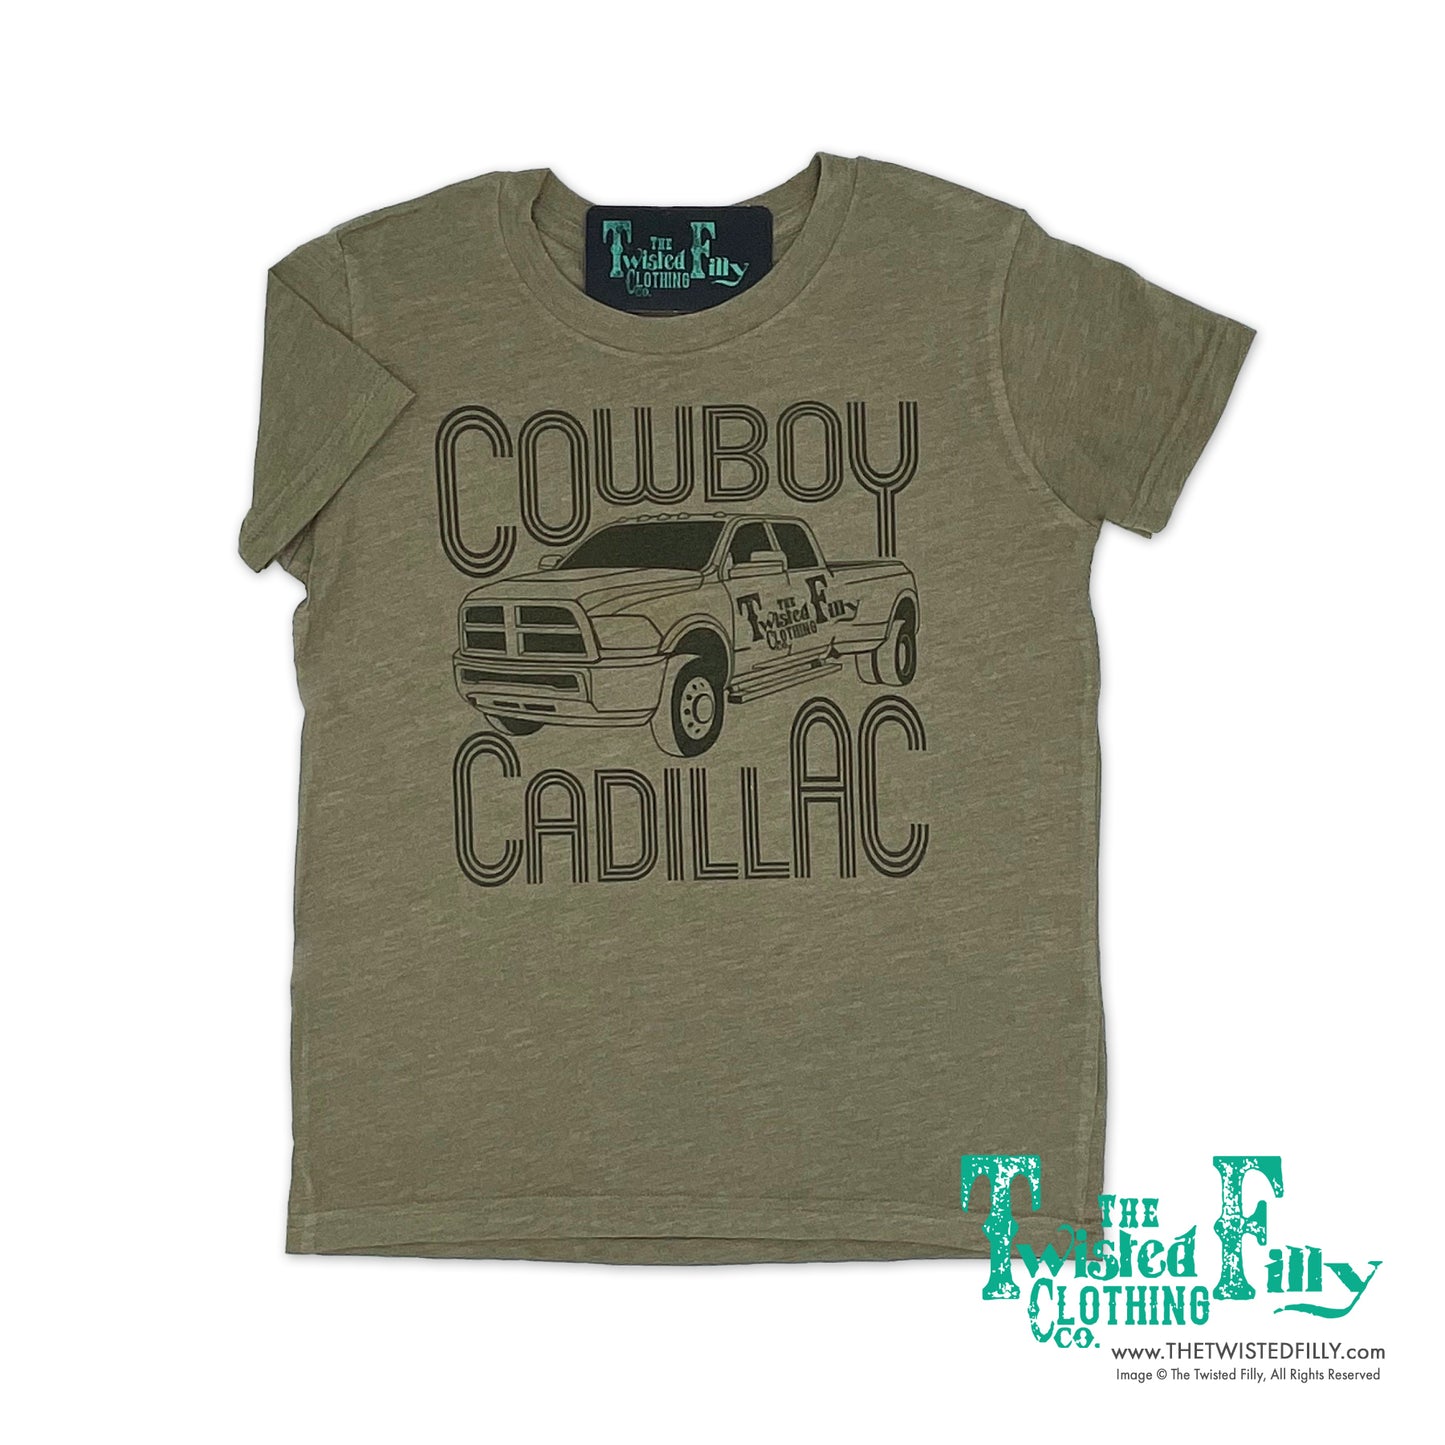 Cowboy Cadillac - S/S Adult Mens Tee - Olive